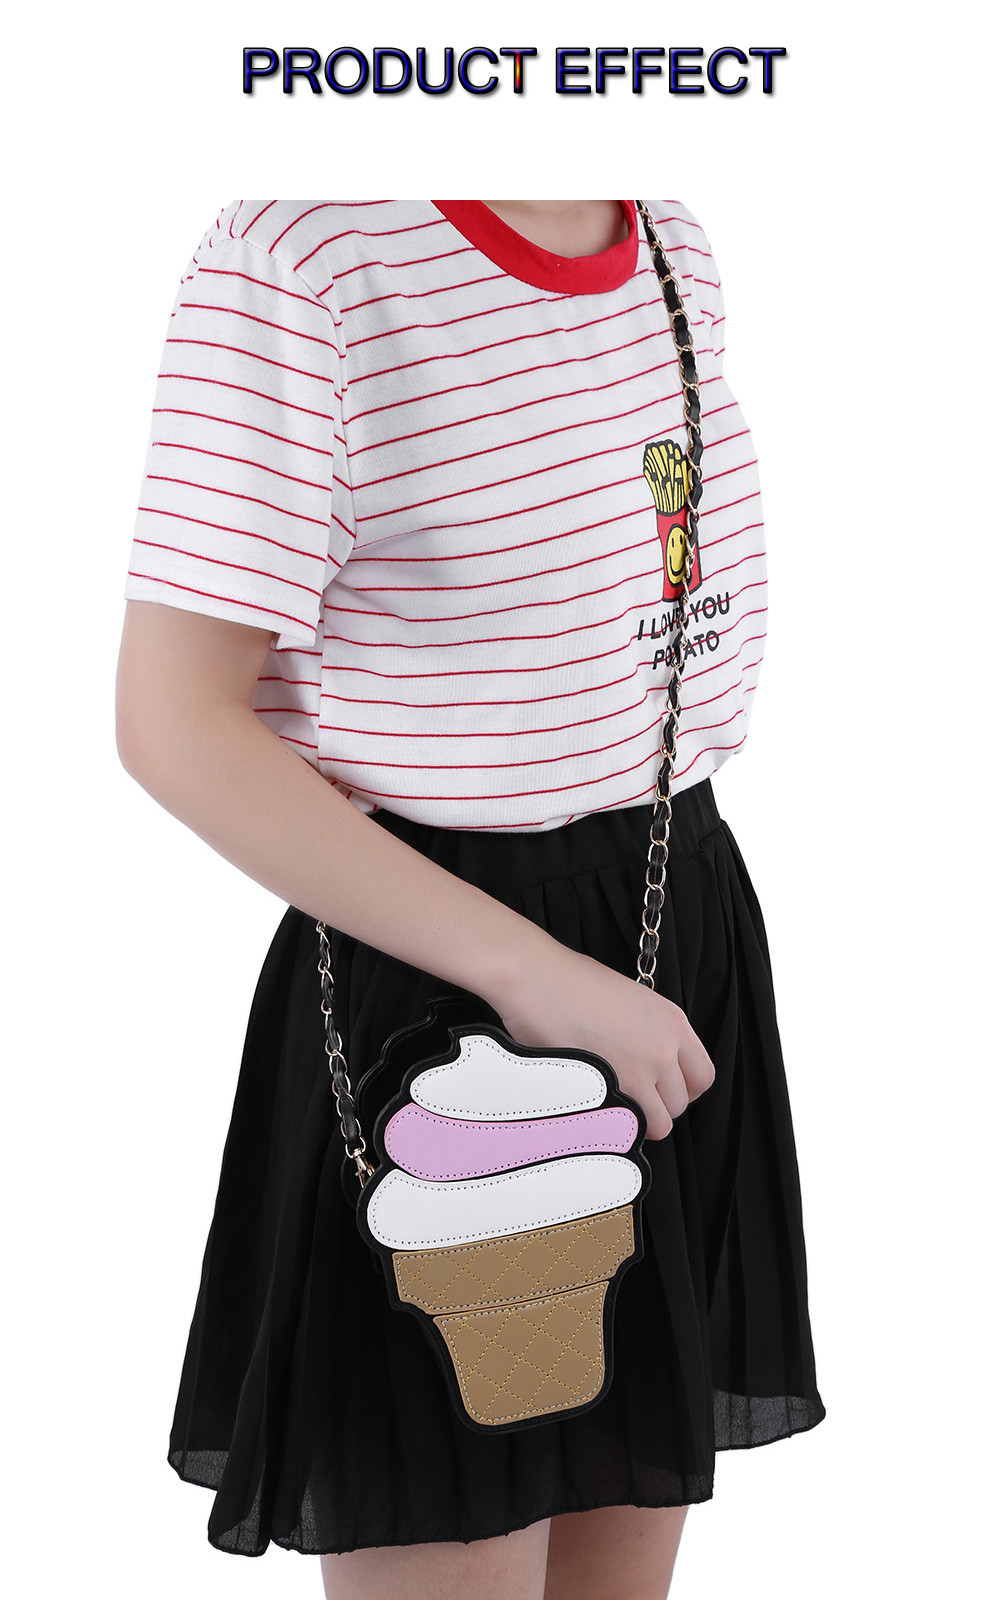 Guapabien Girl Detachable Chain Belt Strap Shoulder Messenger Cell Phone Bag